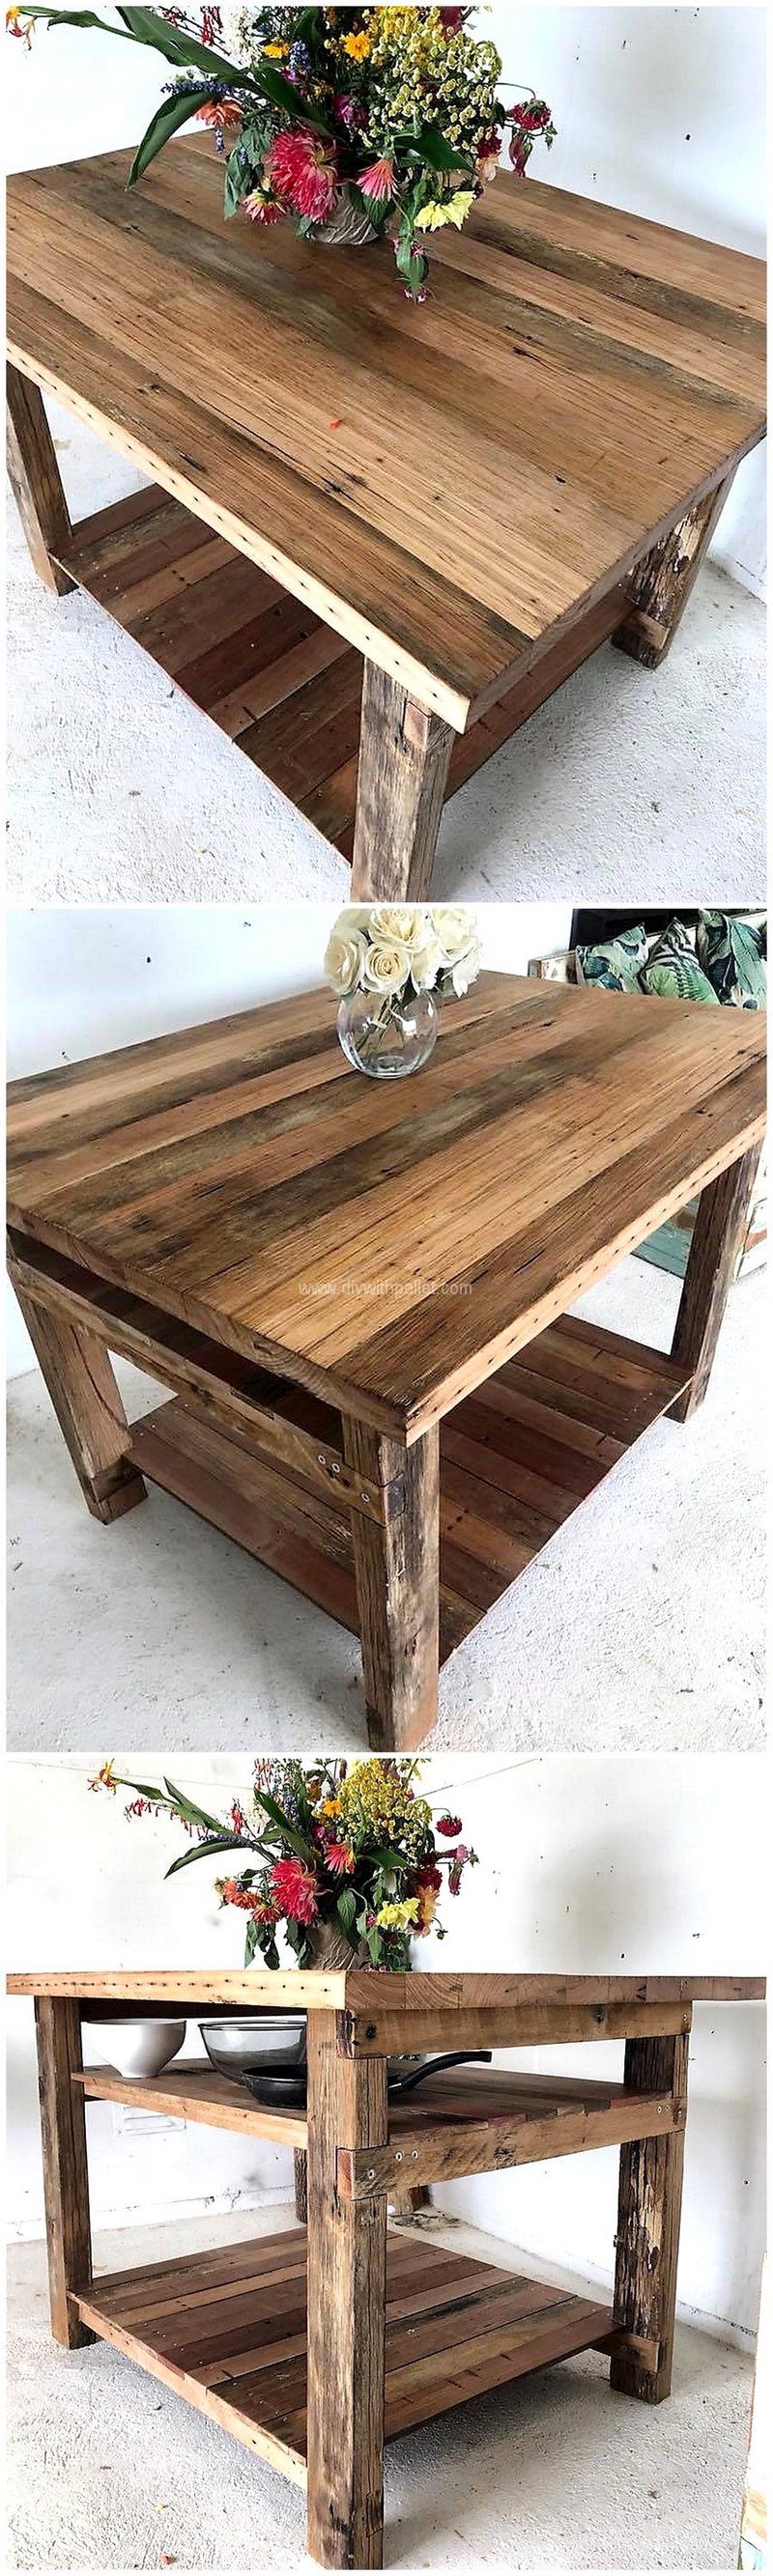 repurposed pallet table